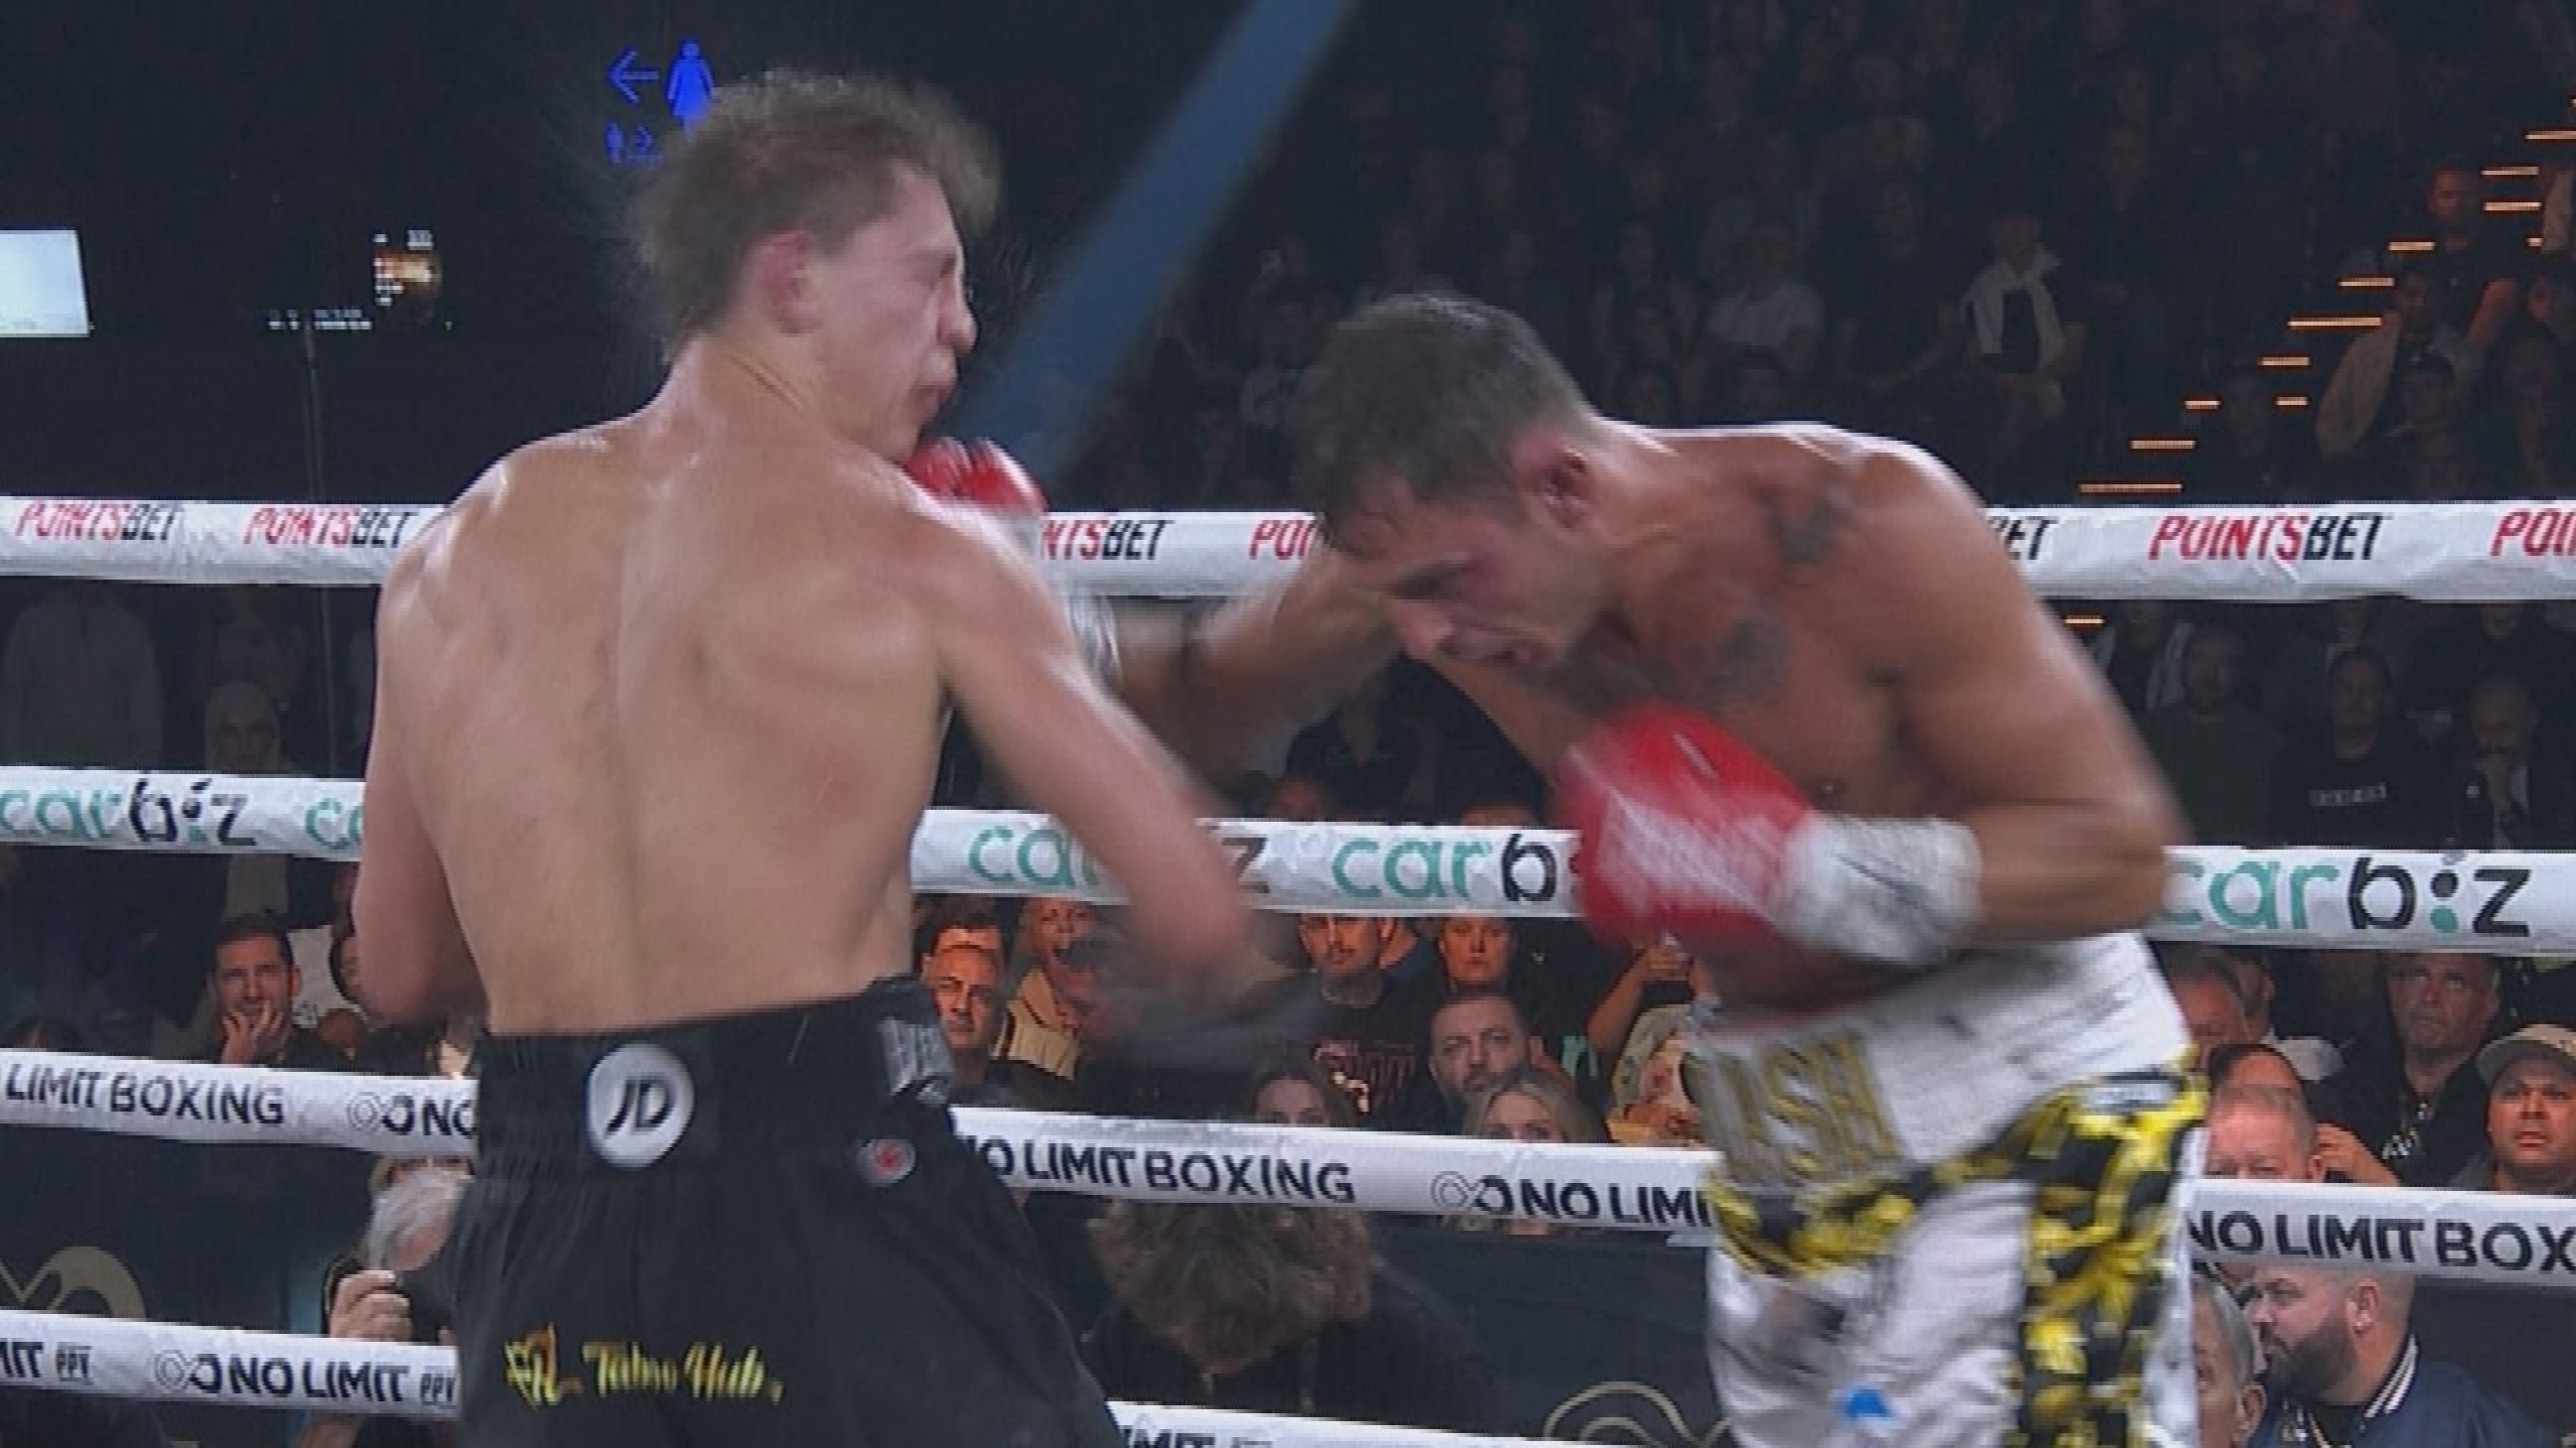 Danilo Creati landed this massive blow on Nikita Tszyu in the sixth round.